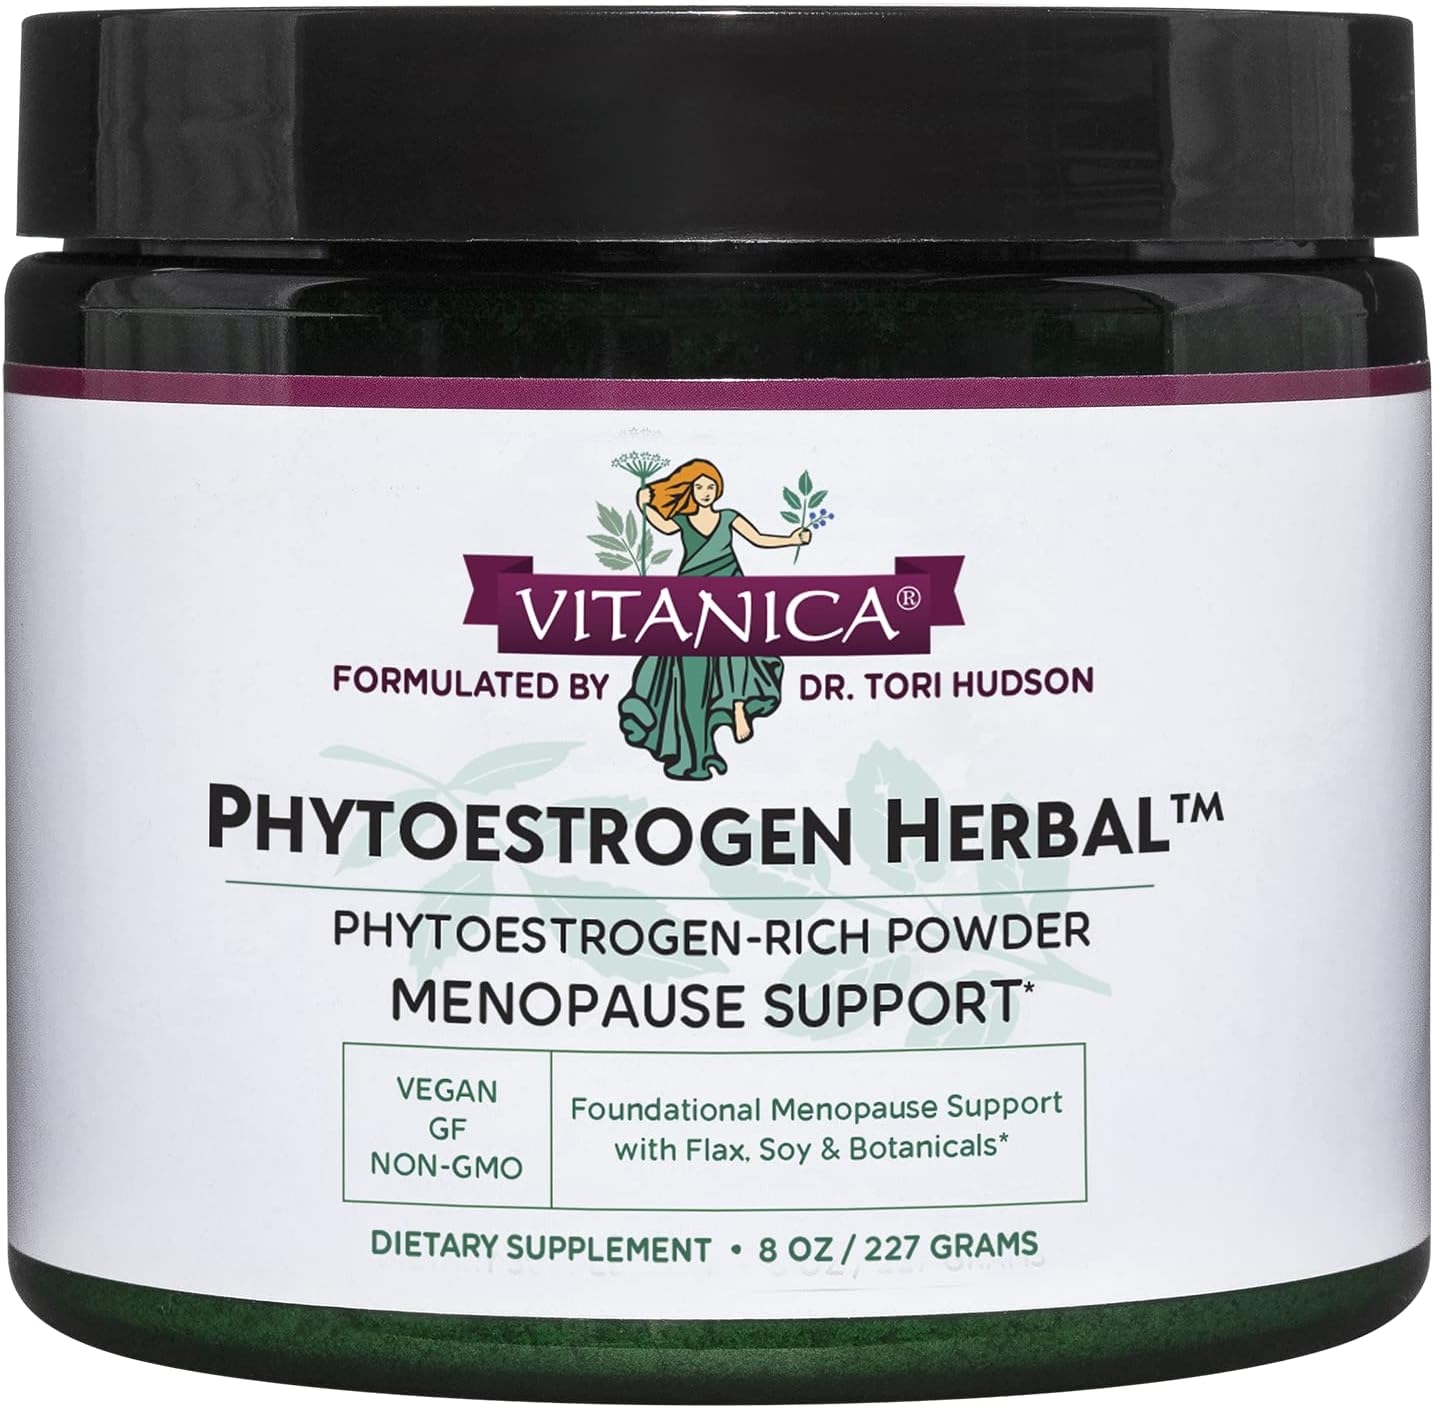 Phytoestrogen Herbal